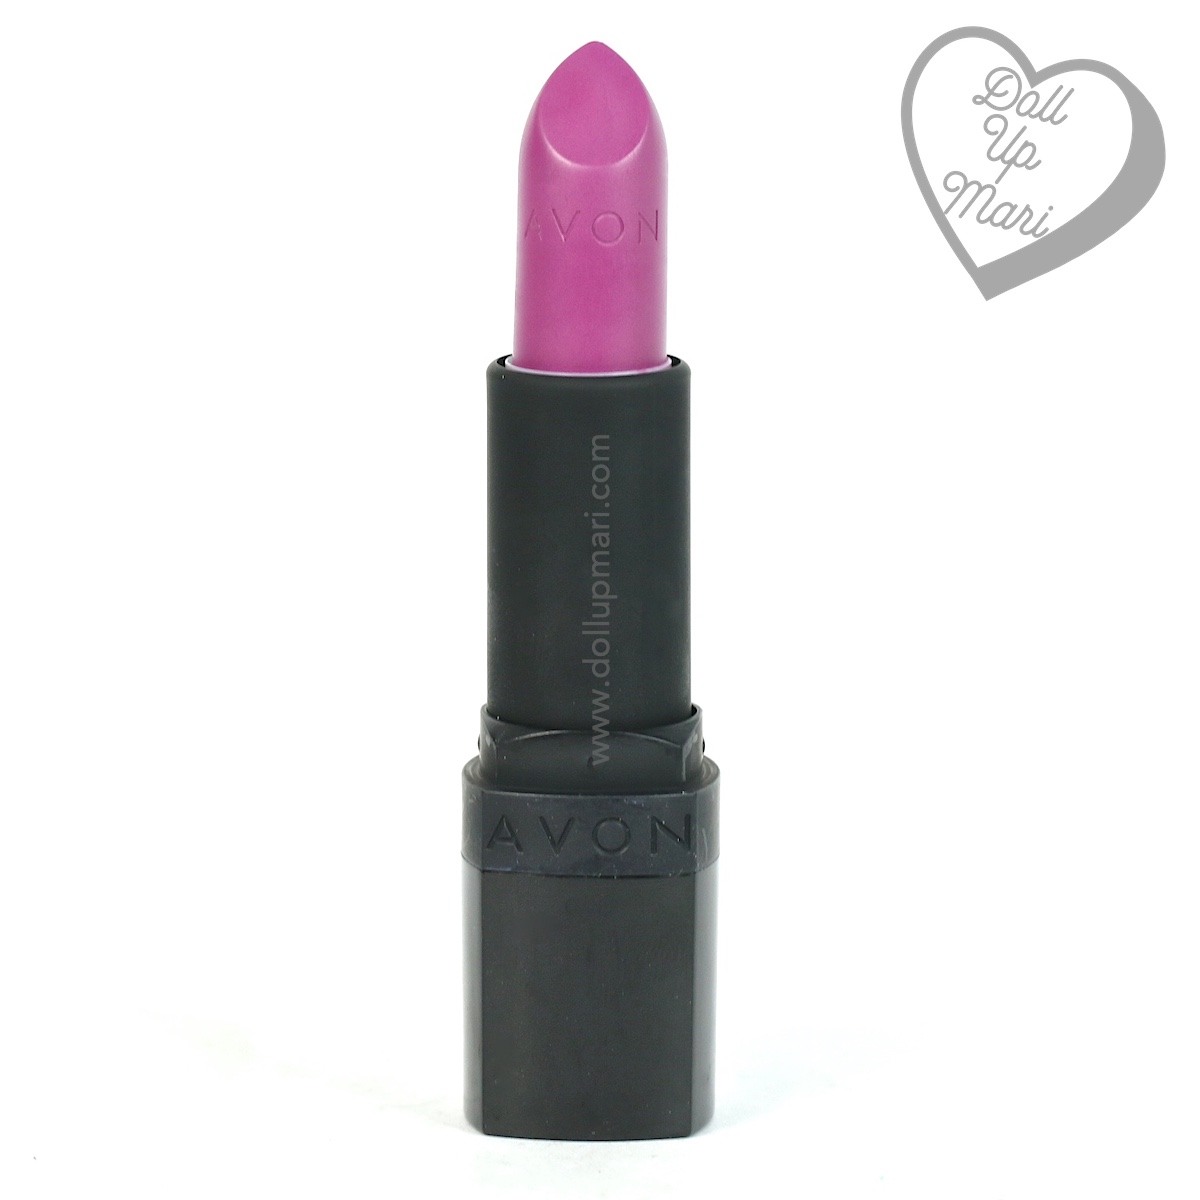 pack shot of Hot Plum shade of AVON Perfectly Matte Lipstick